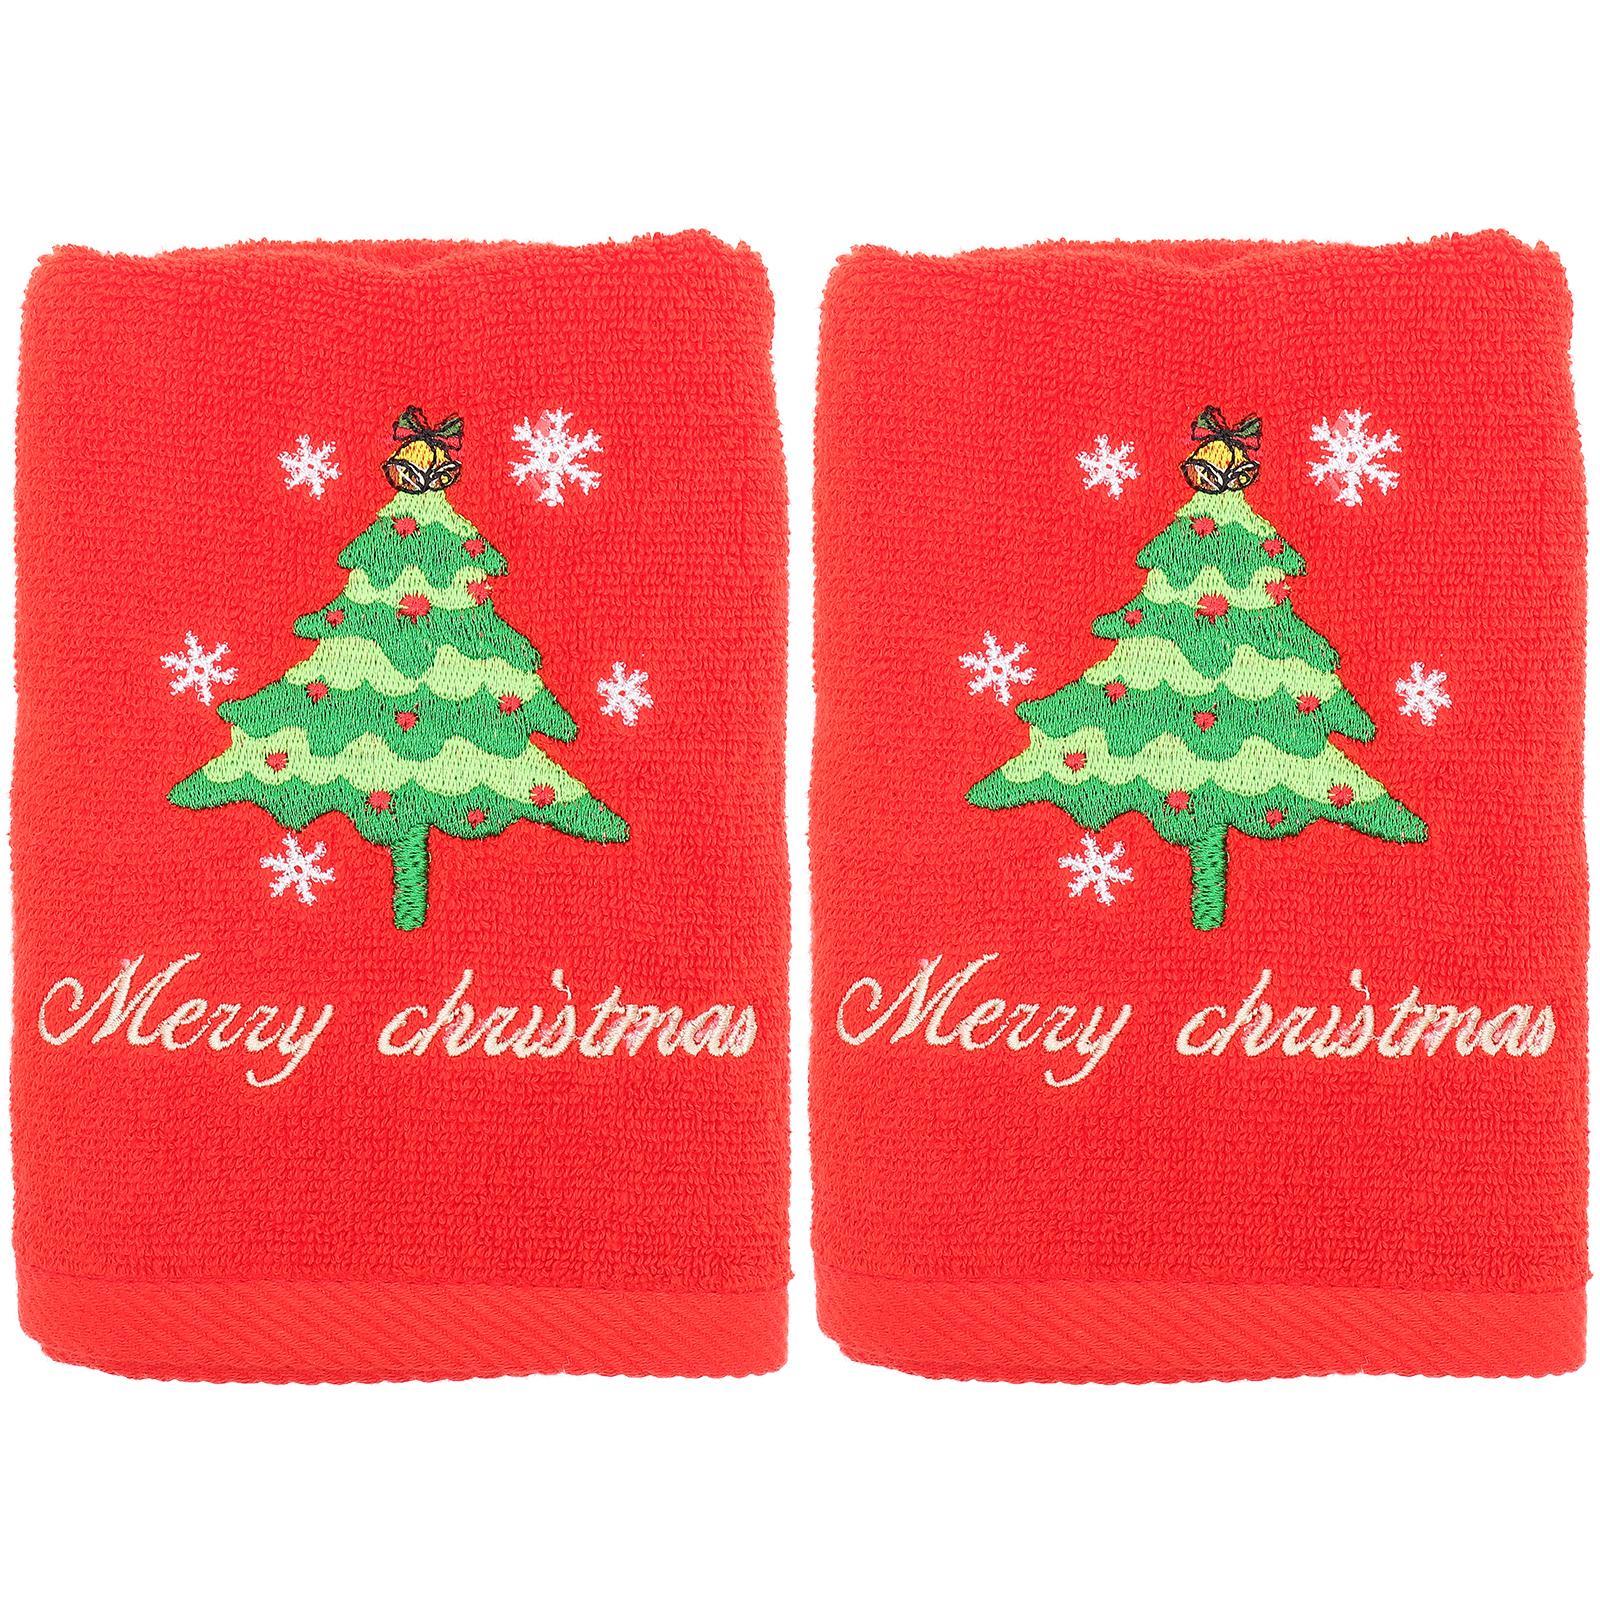 Gift Box Holiday Dish Towel Hand Towel Party Creative Towels Christmas Towel 2 Pcs